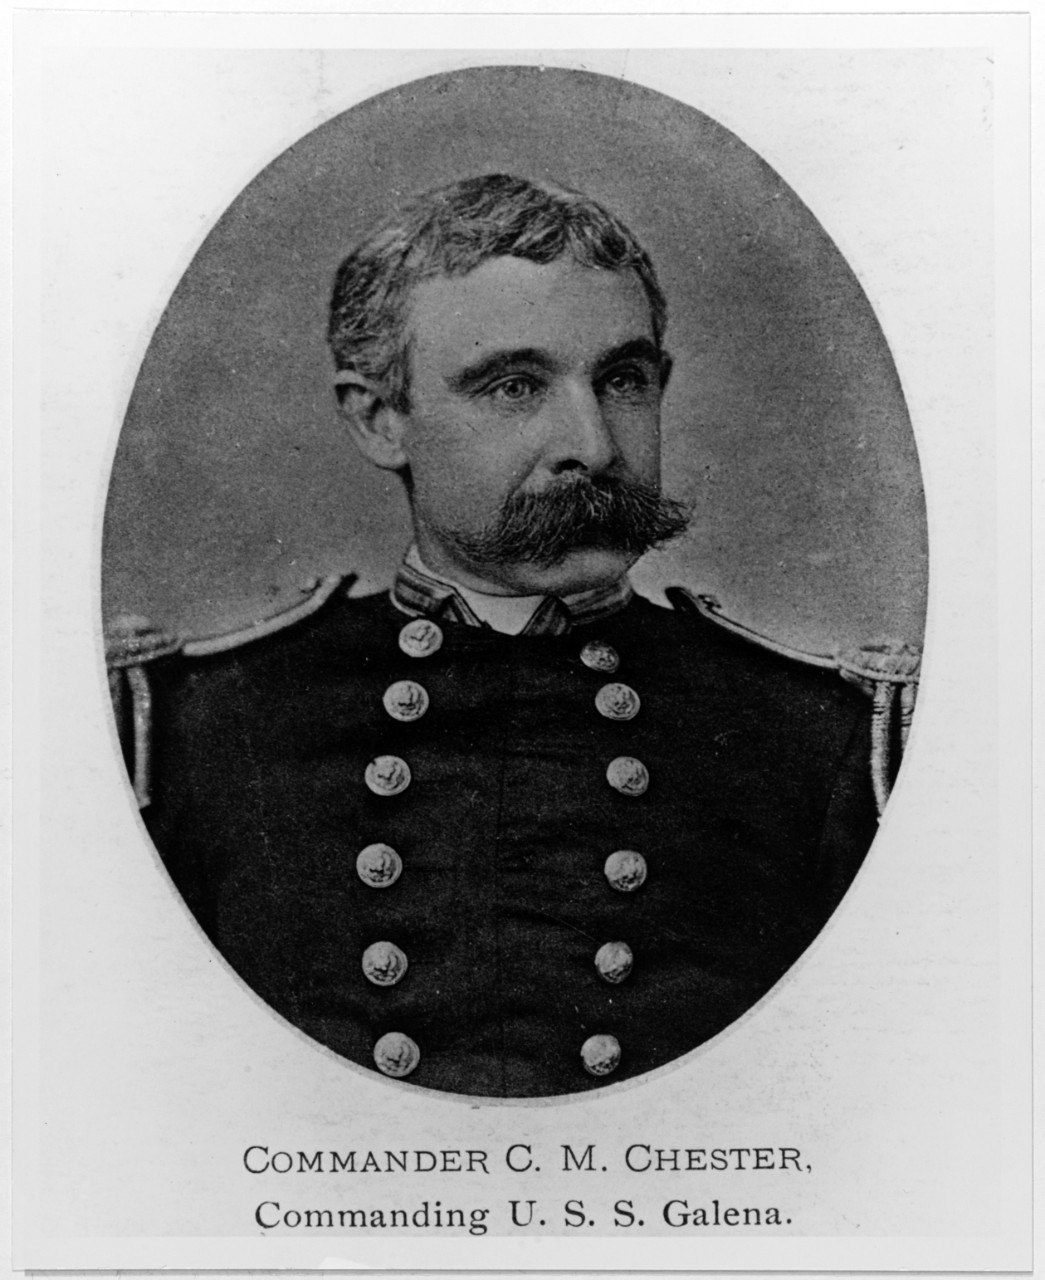 Colby M. Chester, Commander, USN